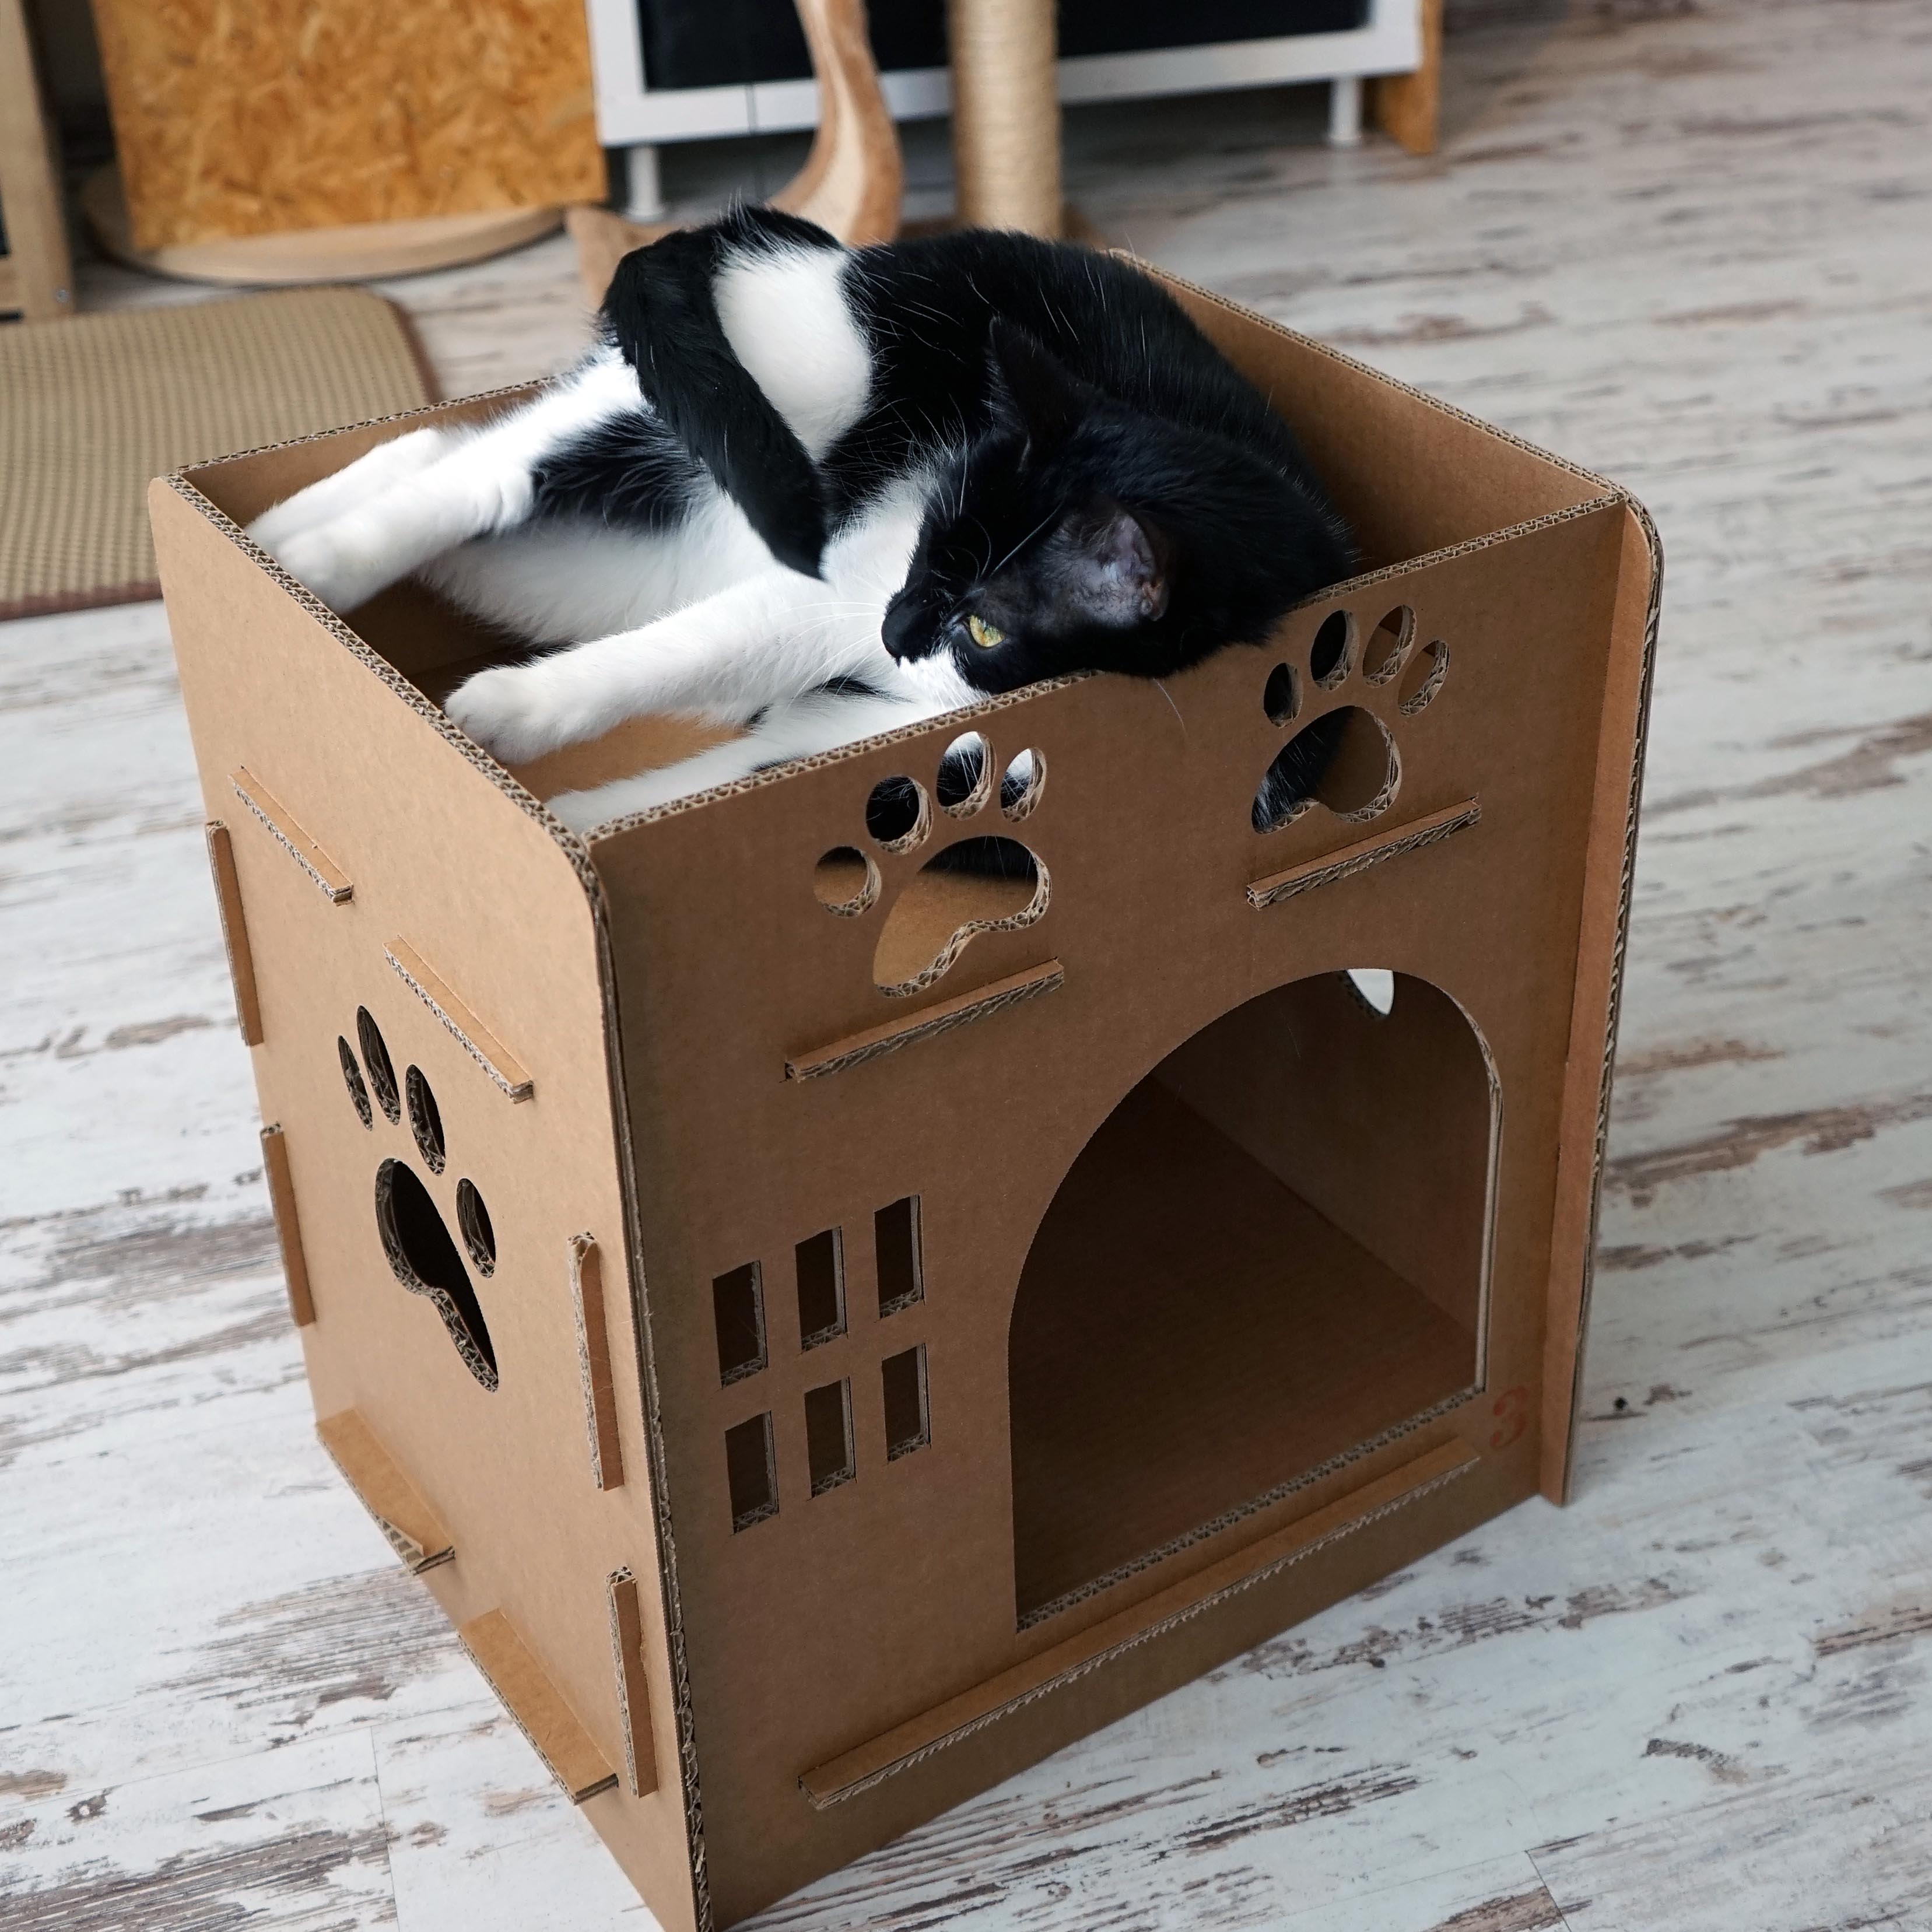 Kerel Onbevredigend schilder Kattengrot vierkant van karton - kattenhuis - kattenhut insteeksysteem |  63064